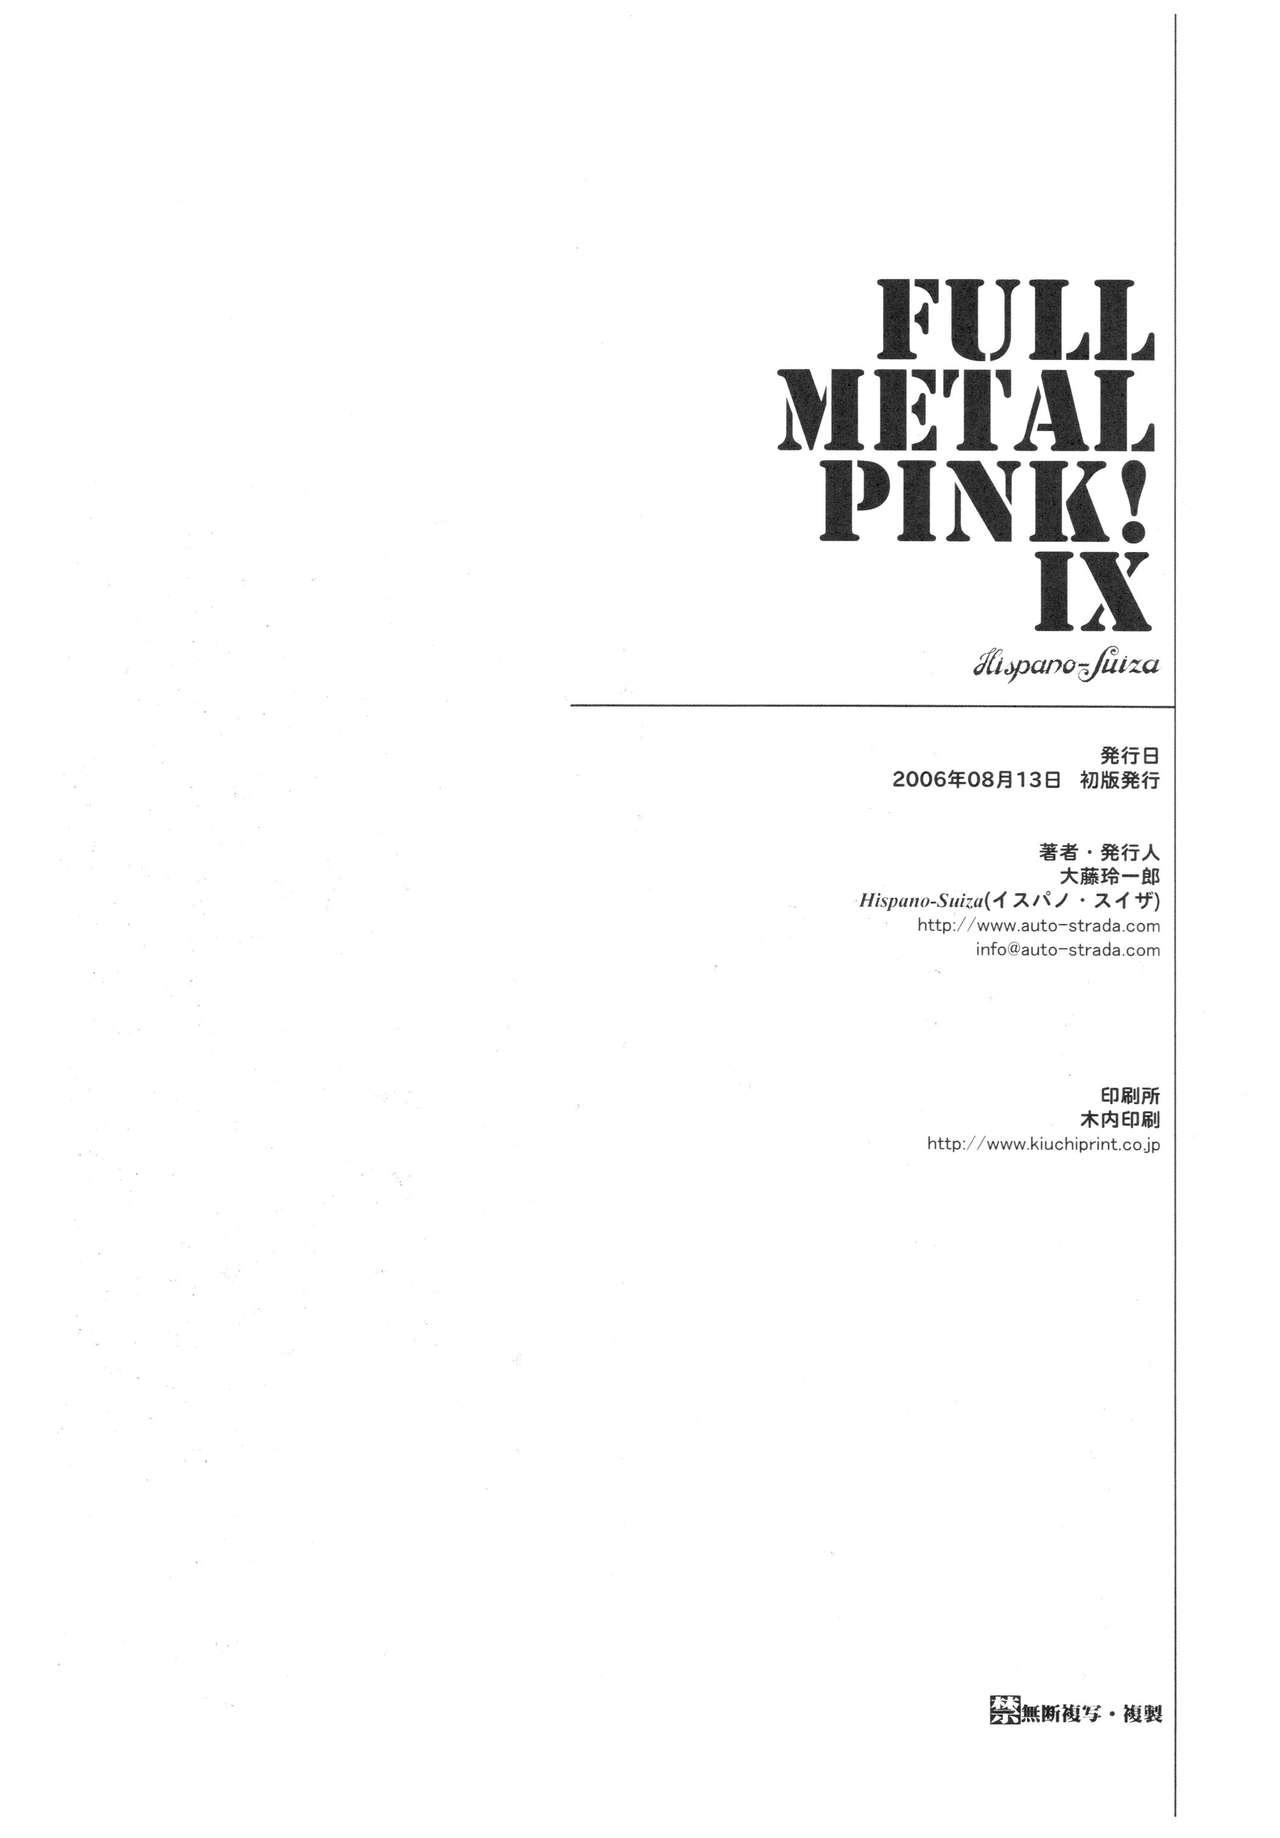 Full Metal Pink! IX 1